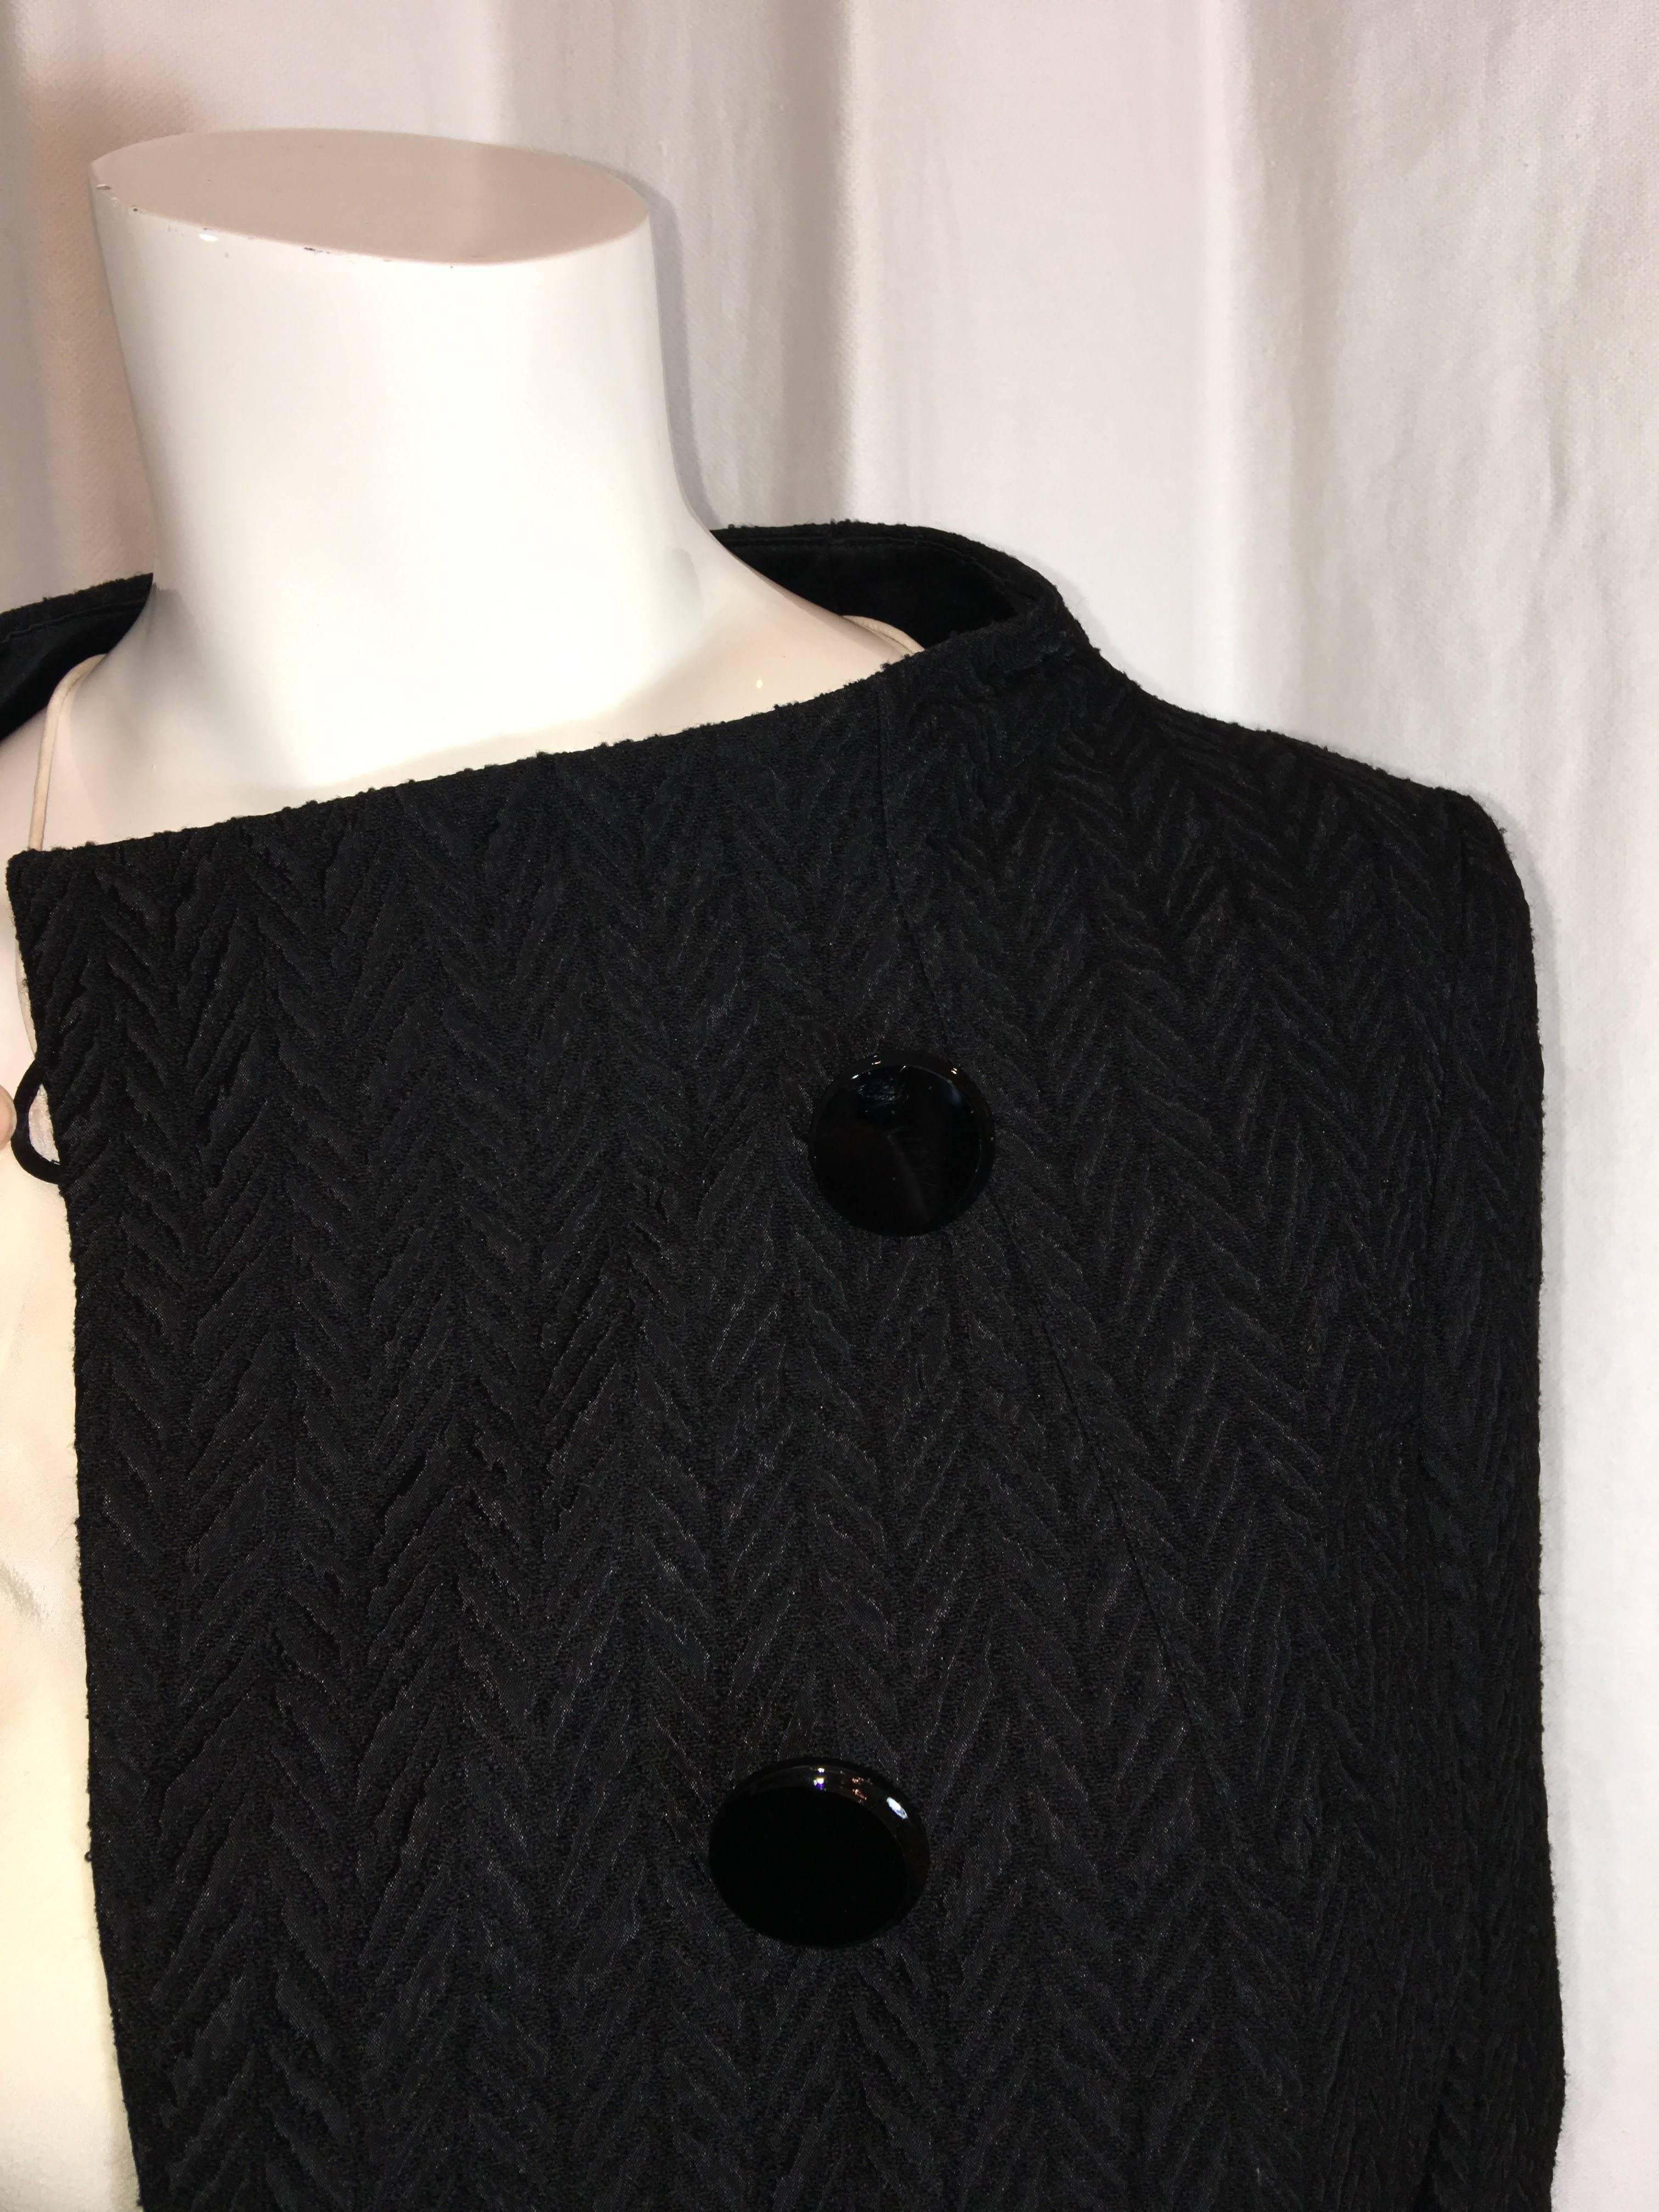 Armani Collezioni Black Chevron Blazer style coat with Large Button Detail in a silk blend.